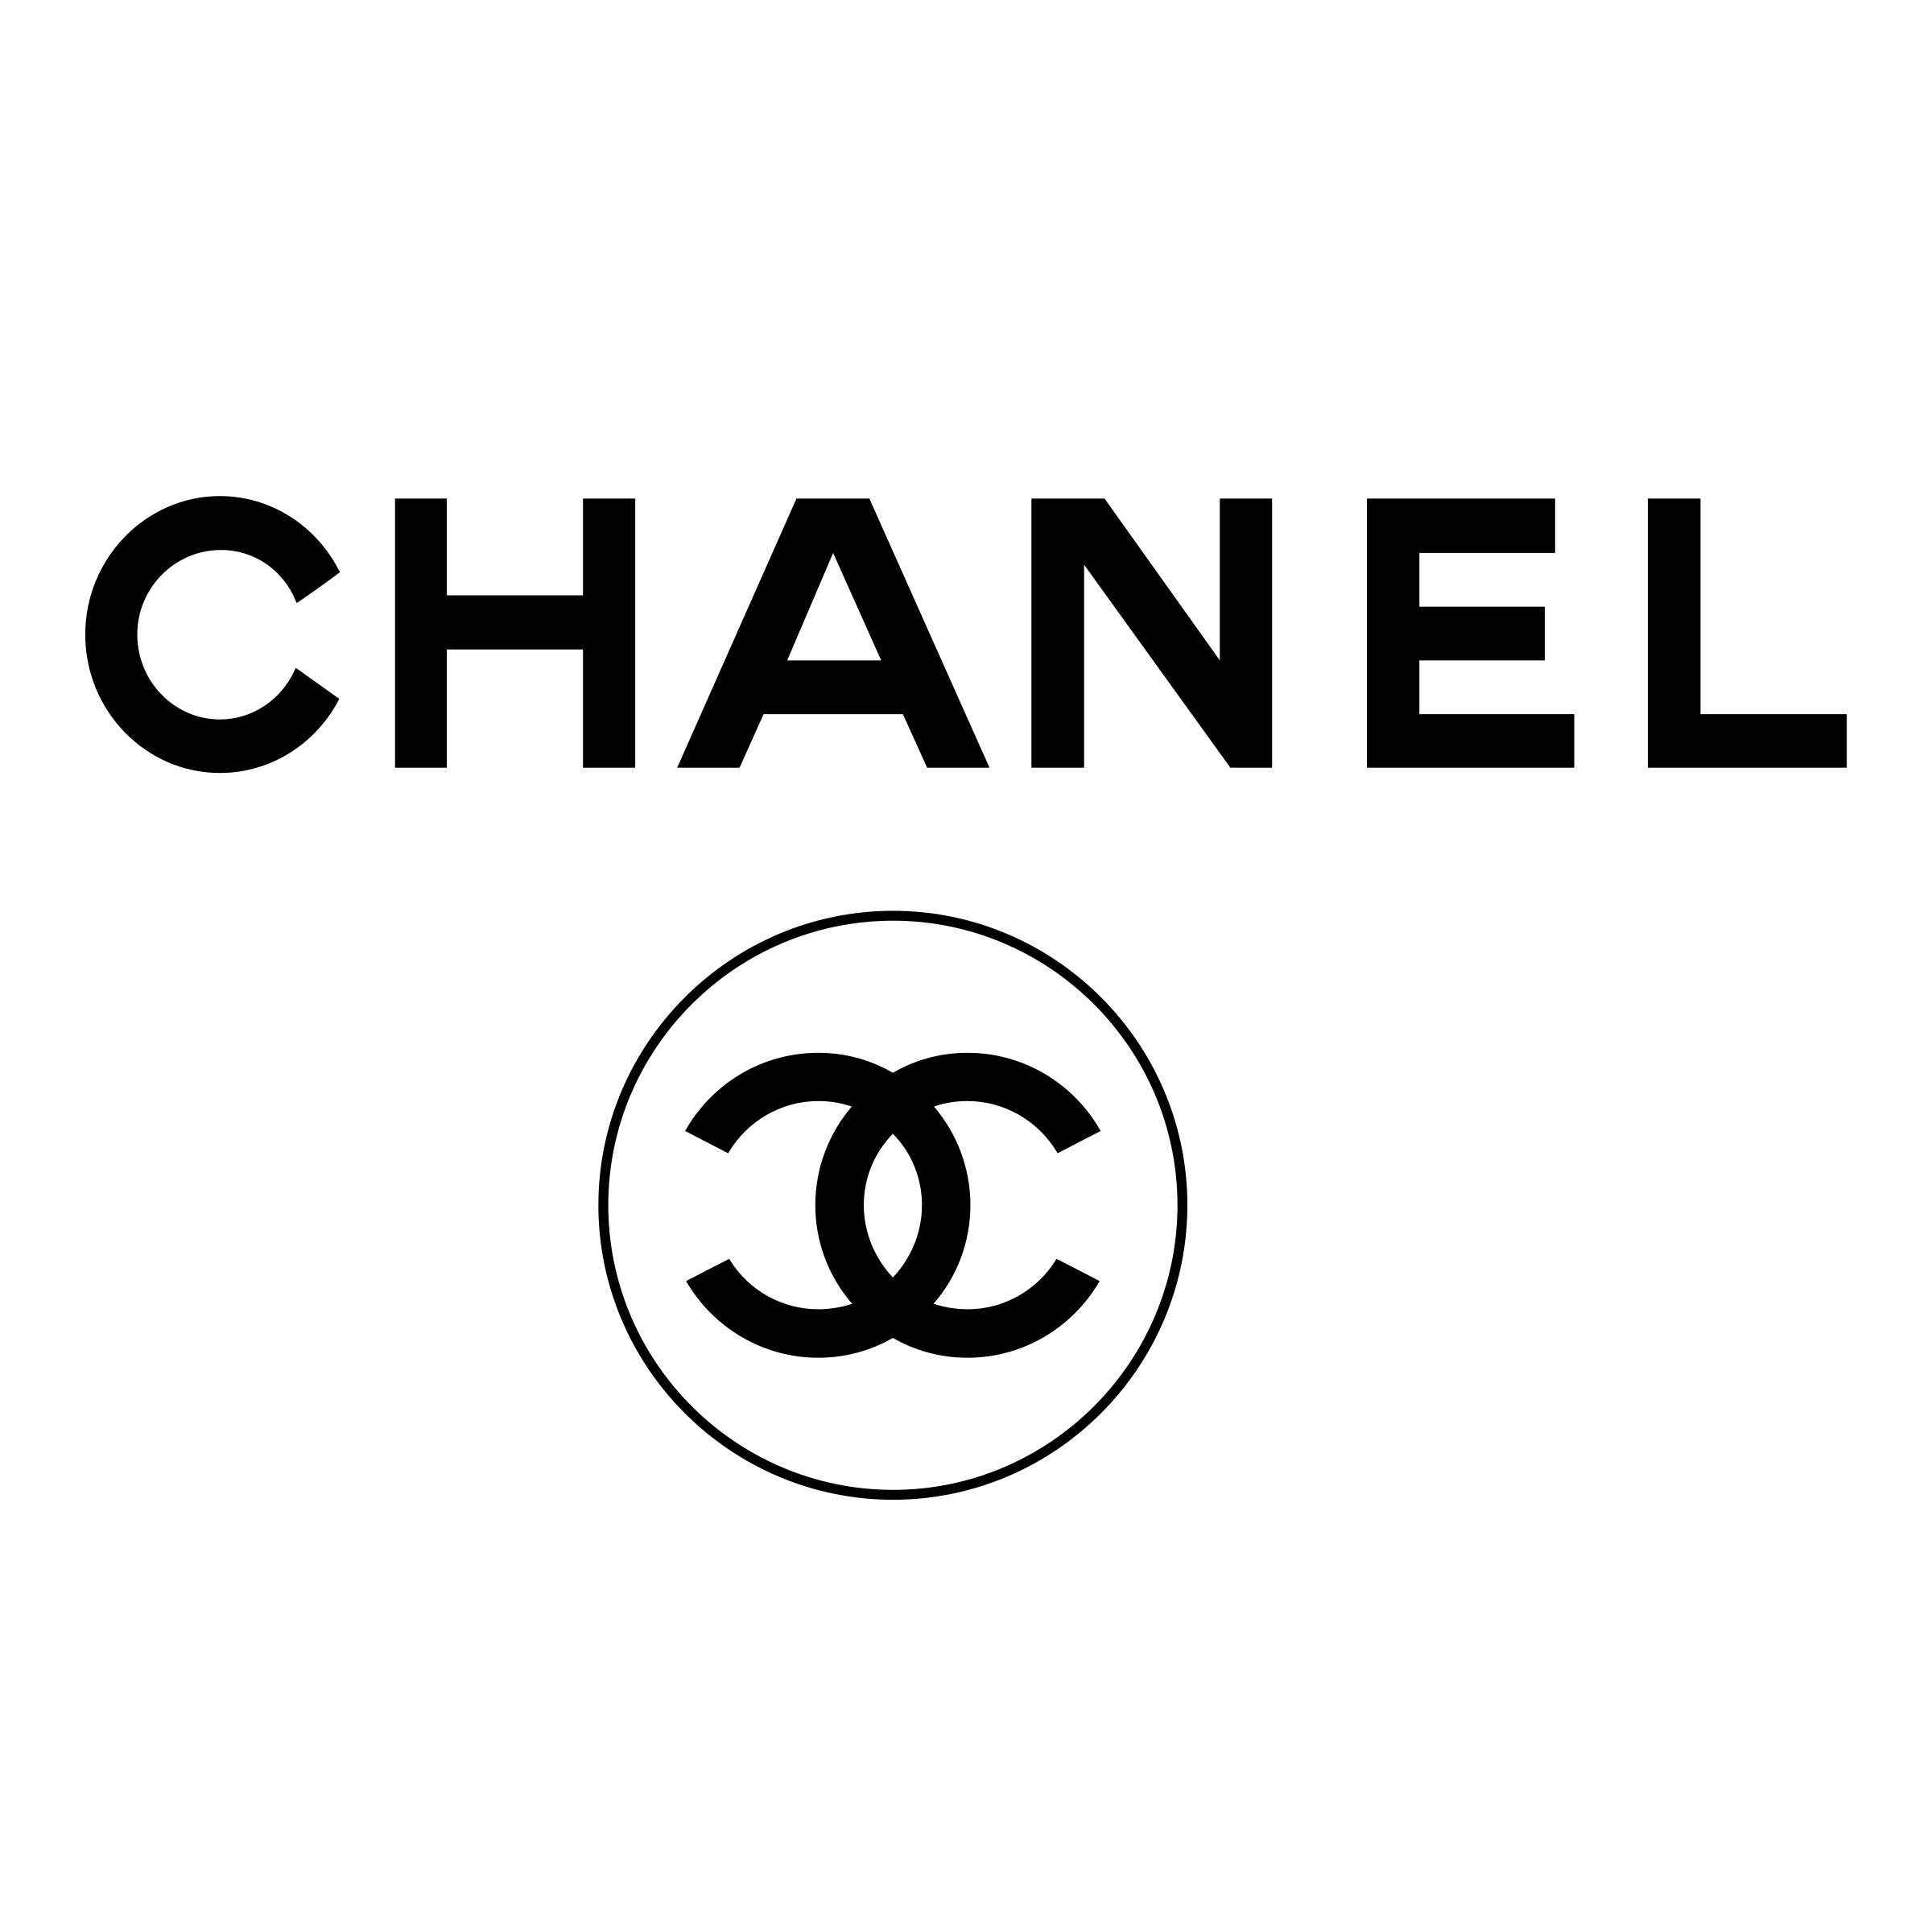 White Chanel Logo - Chanel Logo PNG Transparent & SVG Vector - Freebie Supply